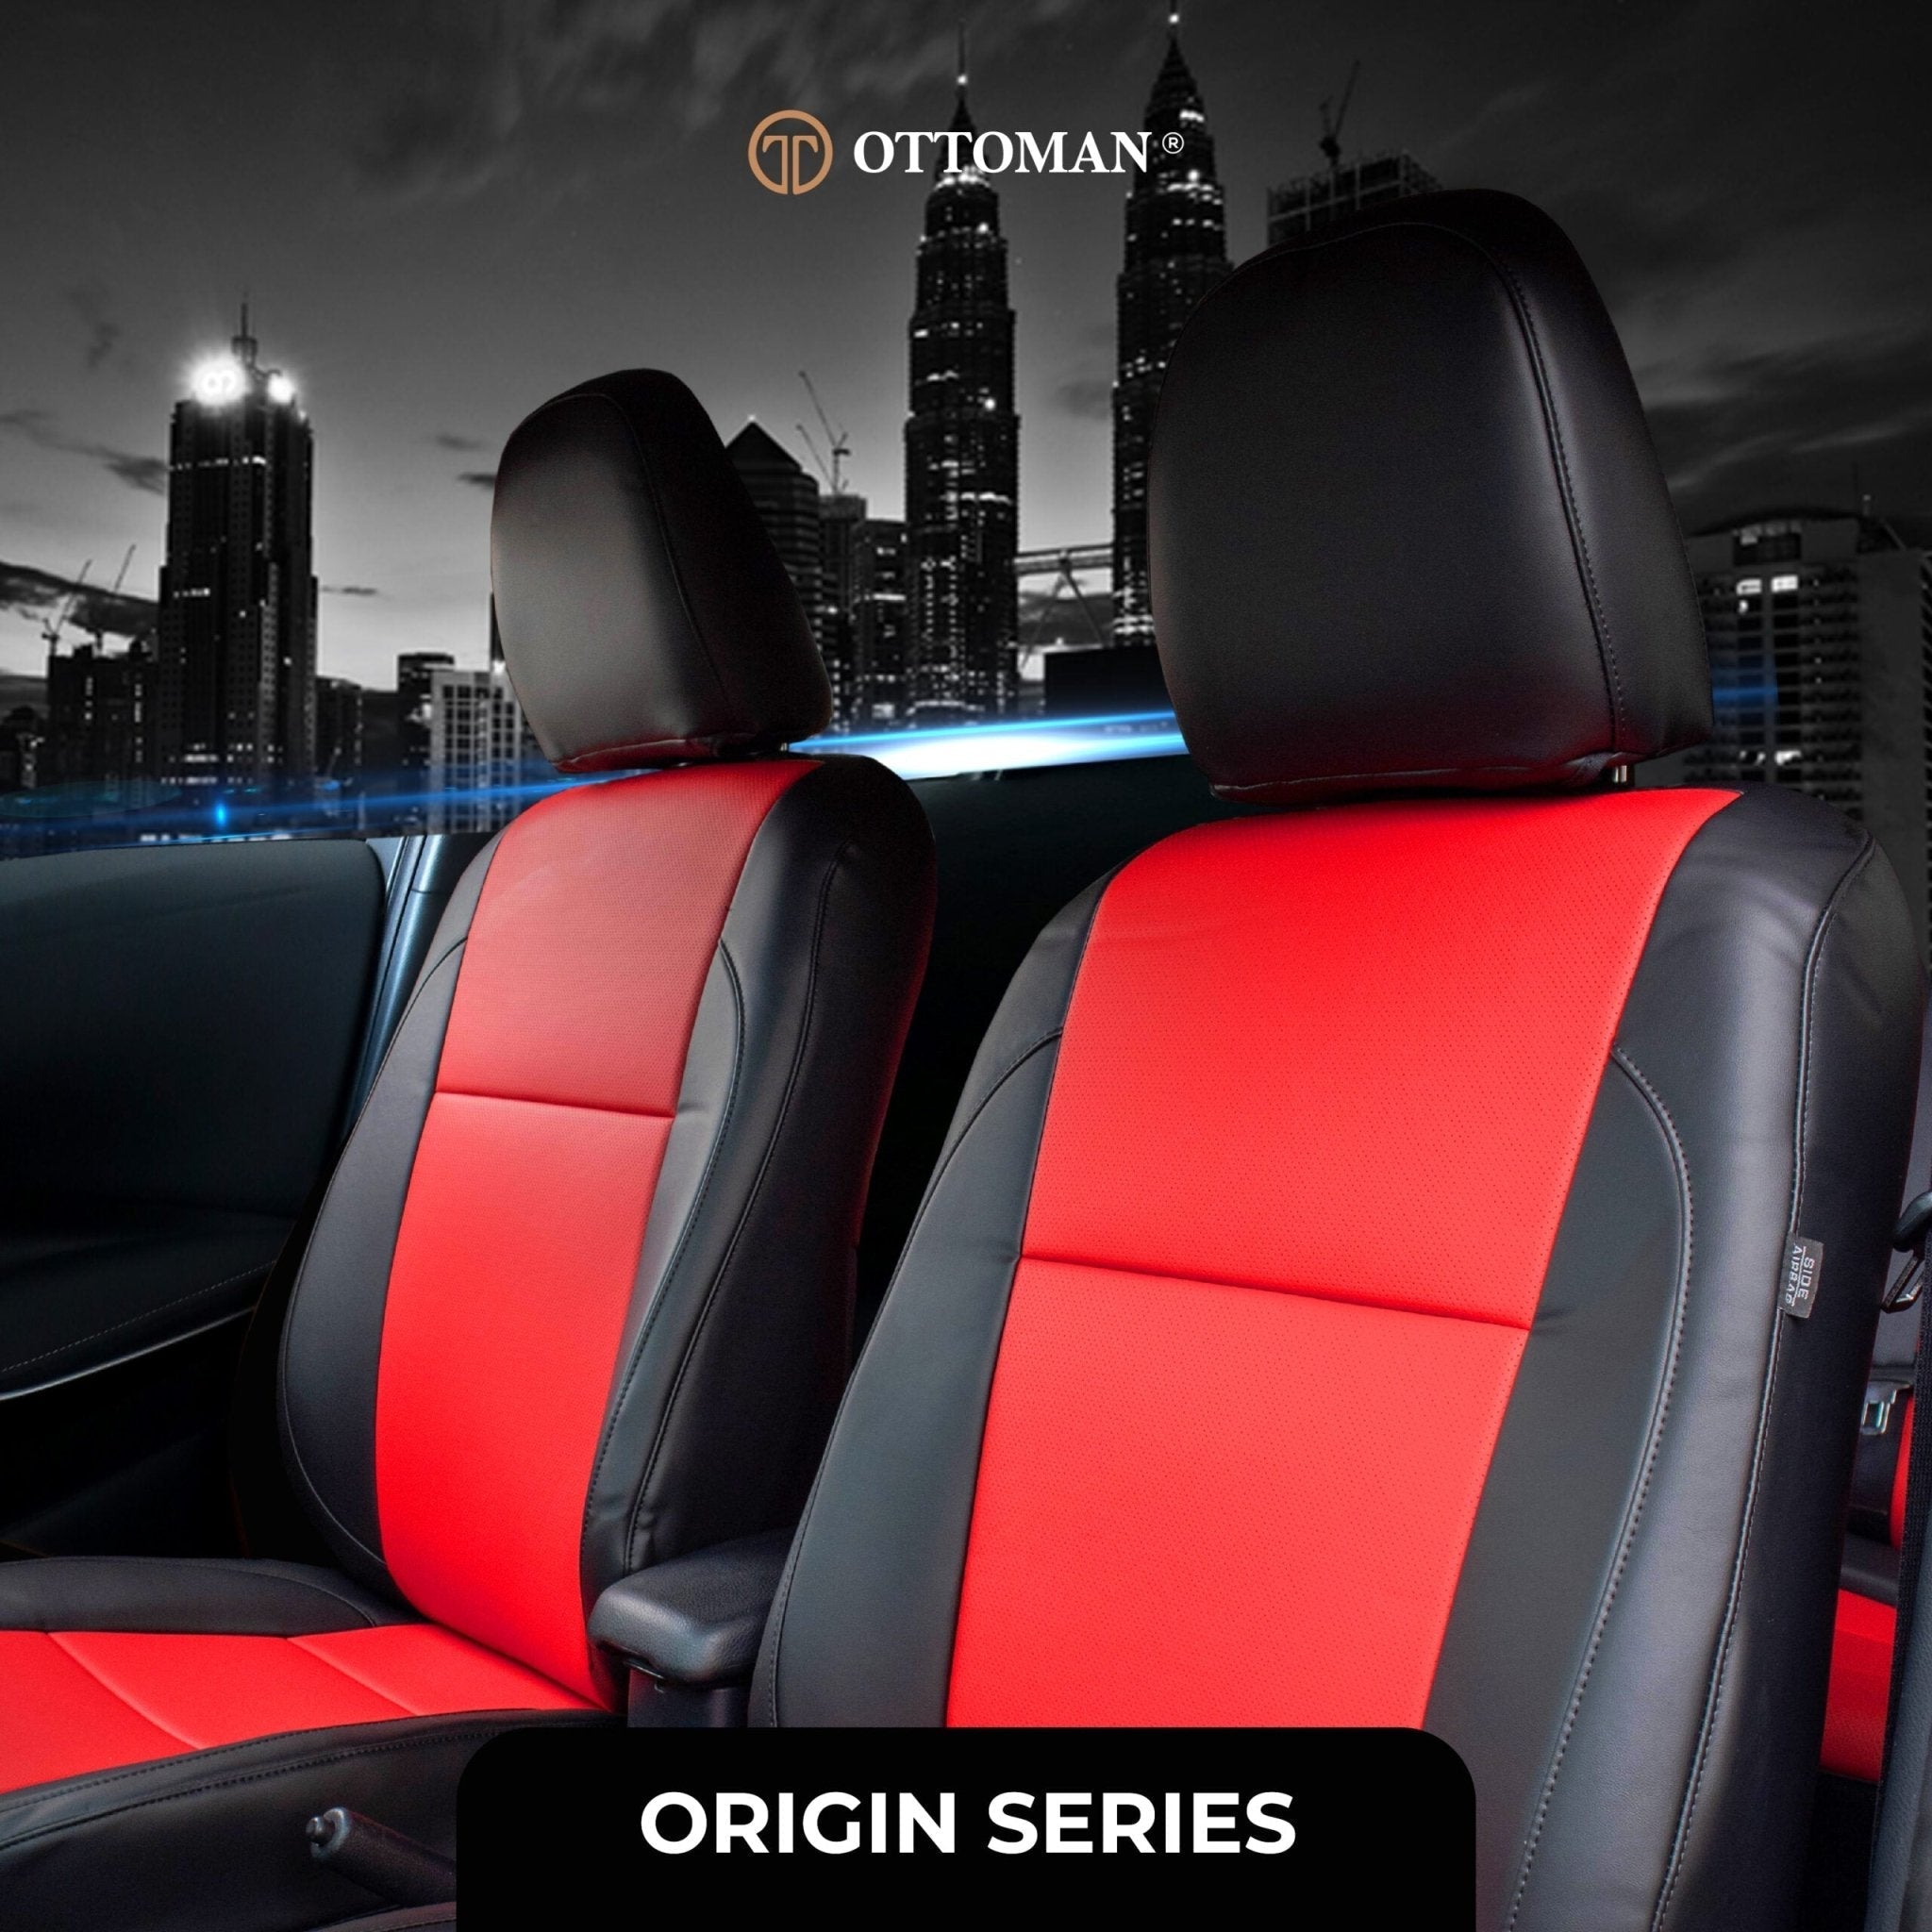 Honda Stream (2006-2014) Ottoman Seat Cover Seat Cover in Klang Selangor, Penang, Johor Bahru - Ottoman Car Mats